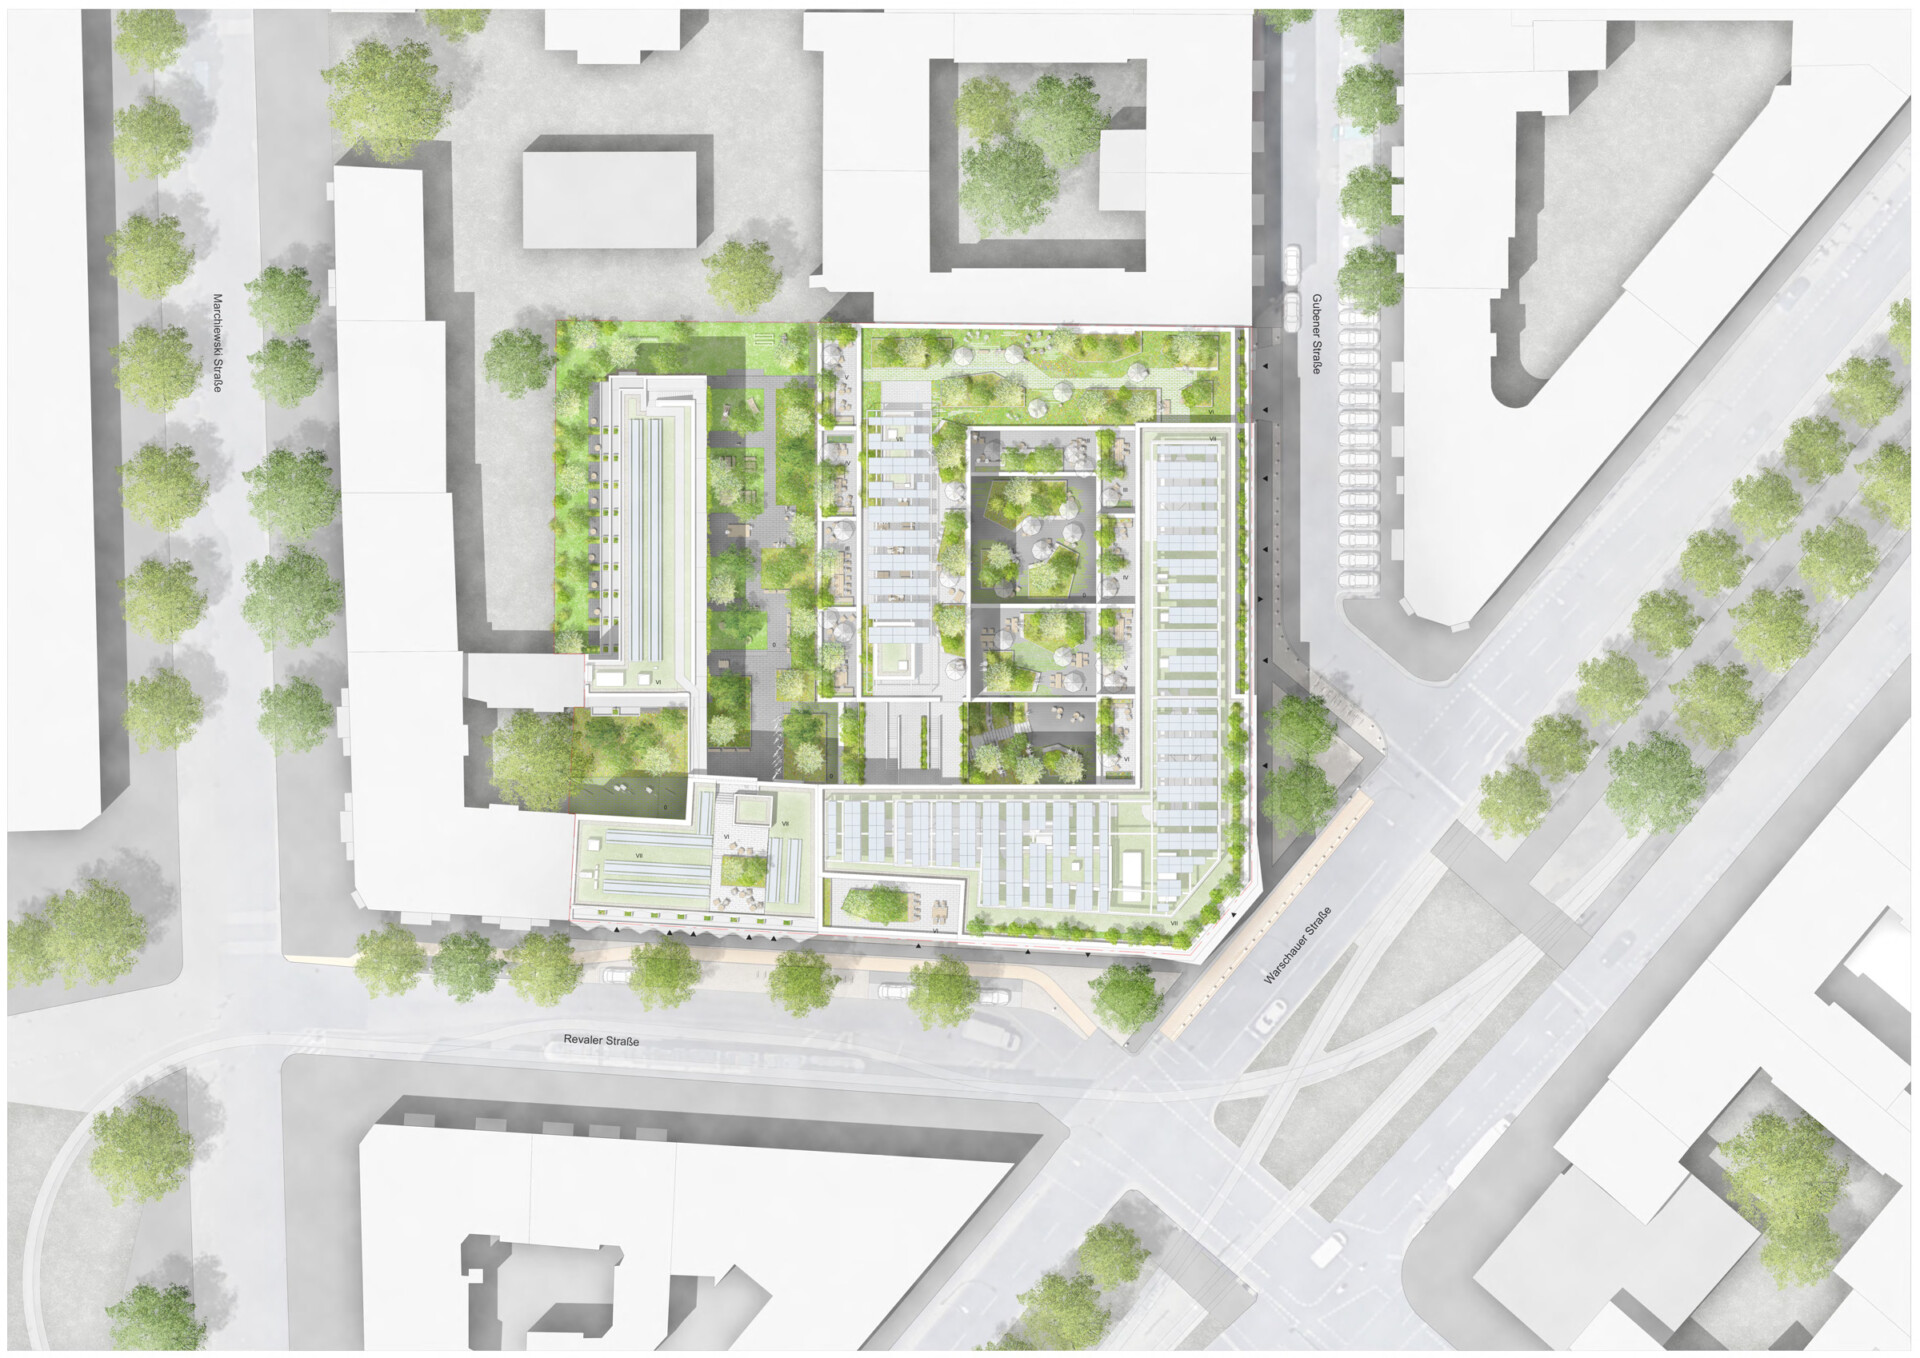 Projekt-Berlin-Revaler-Strasse-Visualisierung-Lageplan-1920x1358.jpg